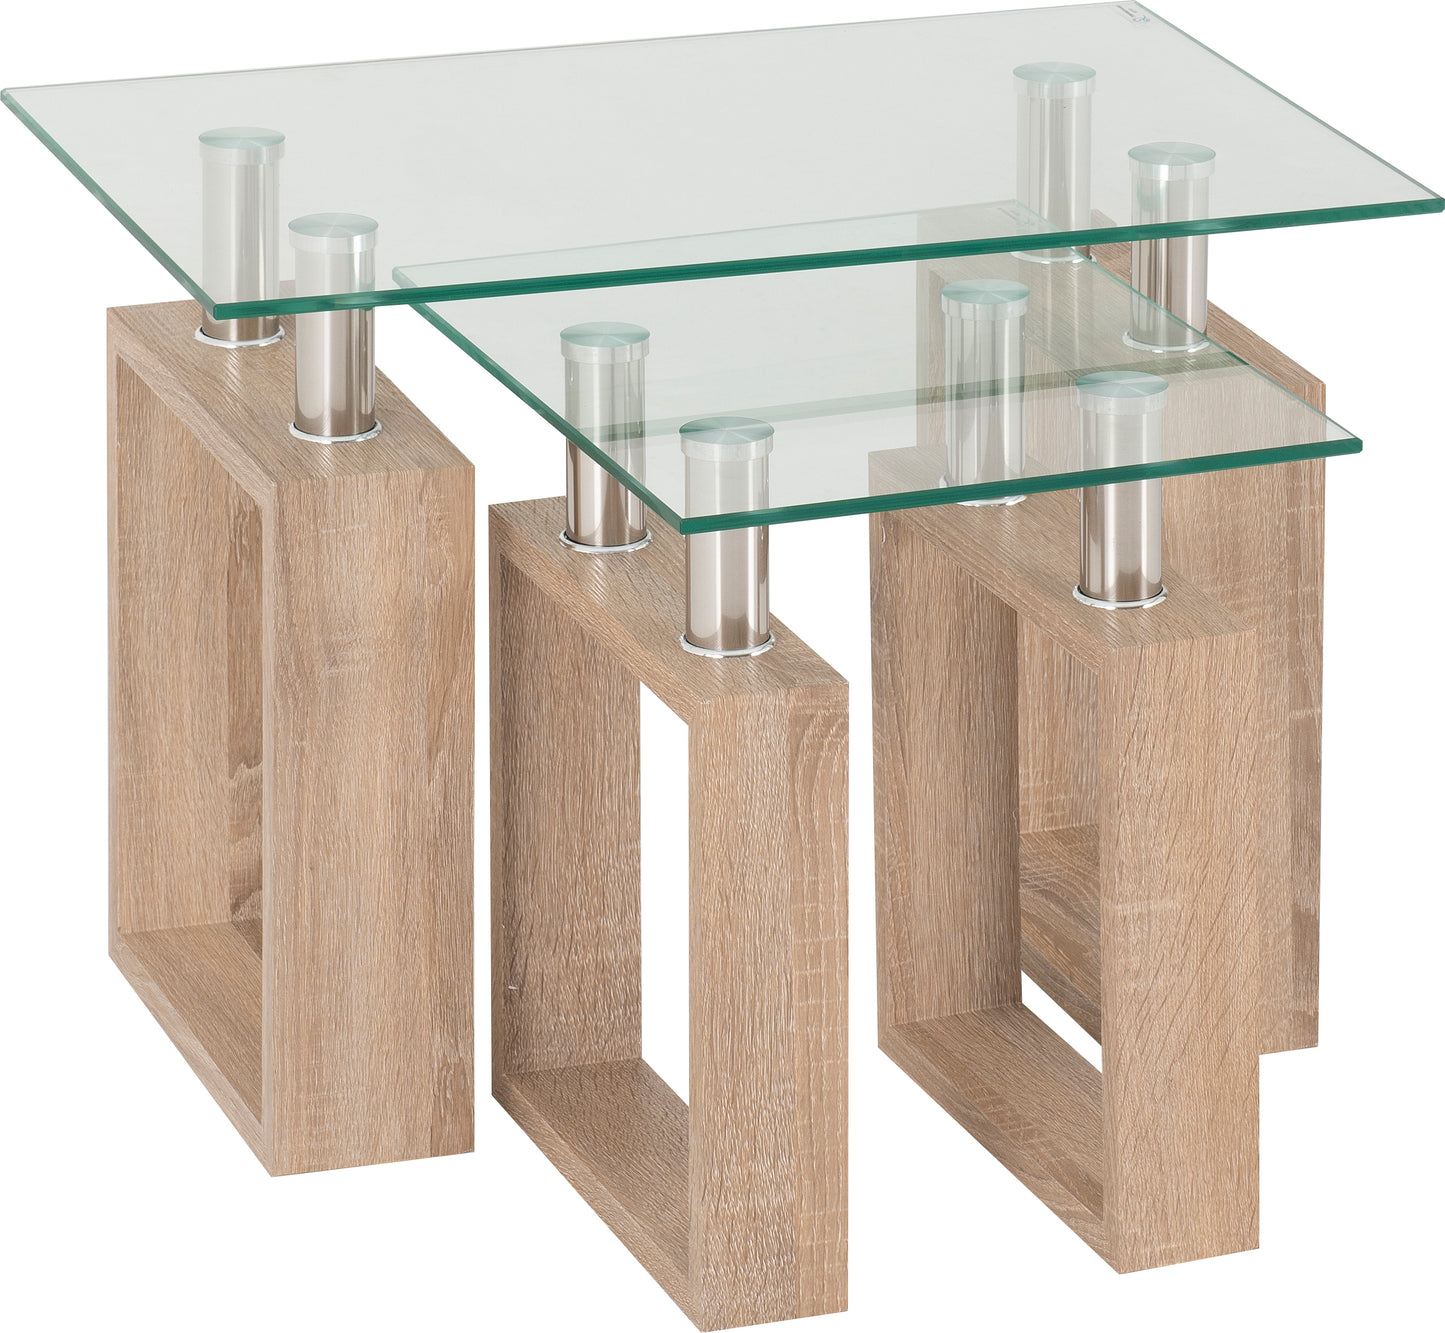 MILAN NEST OF TABLES - SONOMA OAK EFFECT VENEER/CLEAR GLASS/SILVER